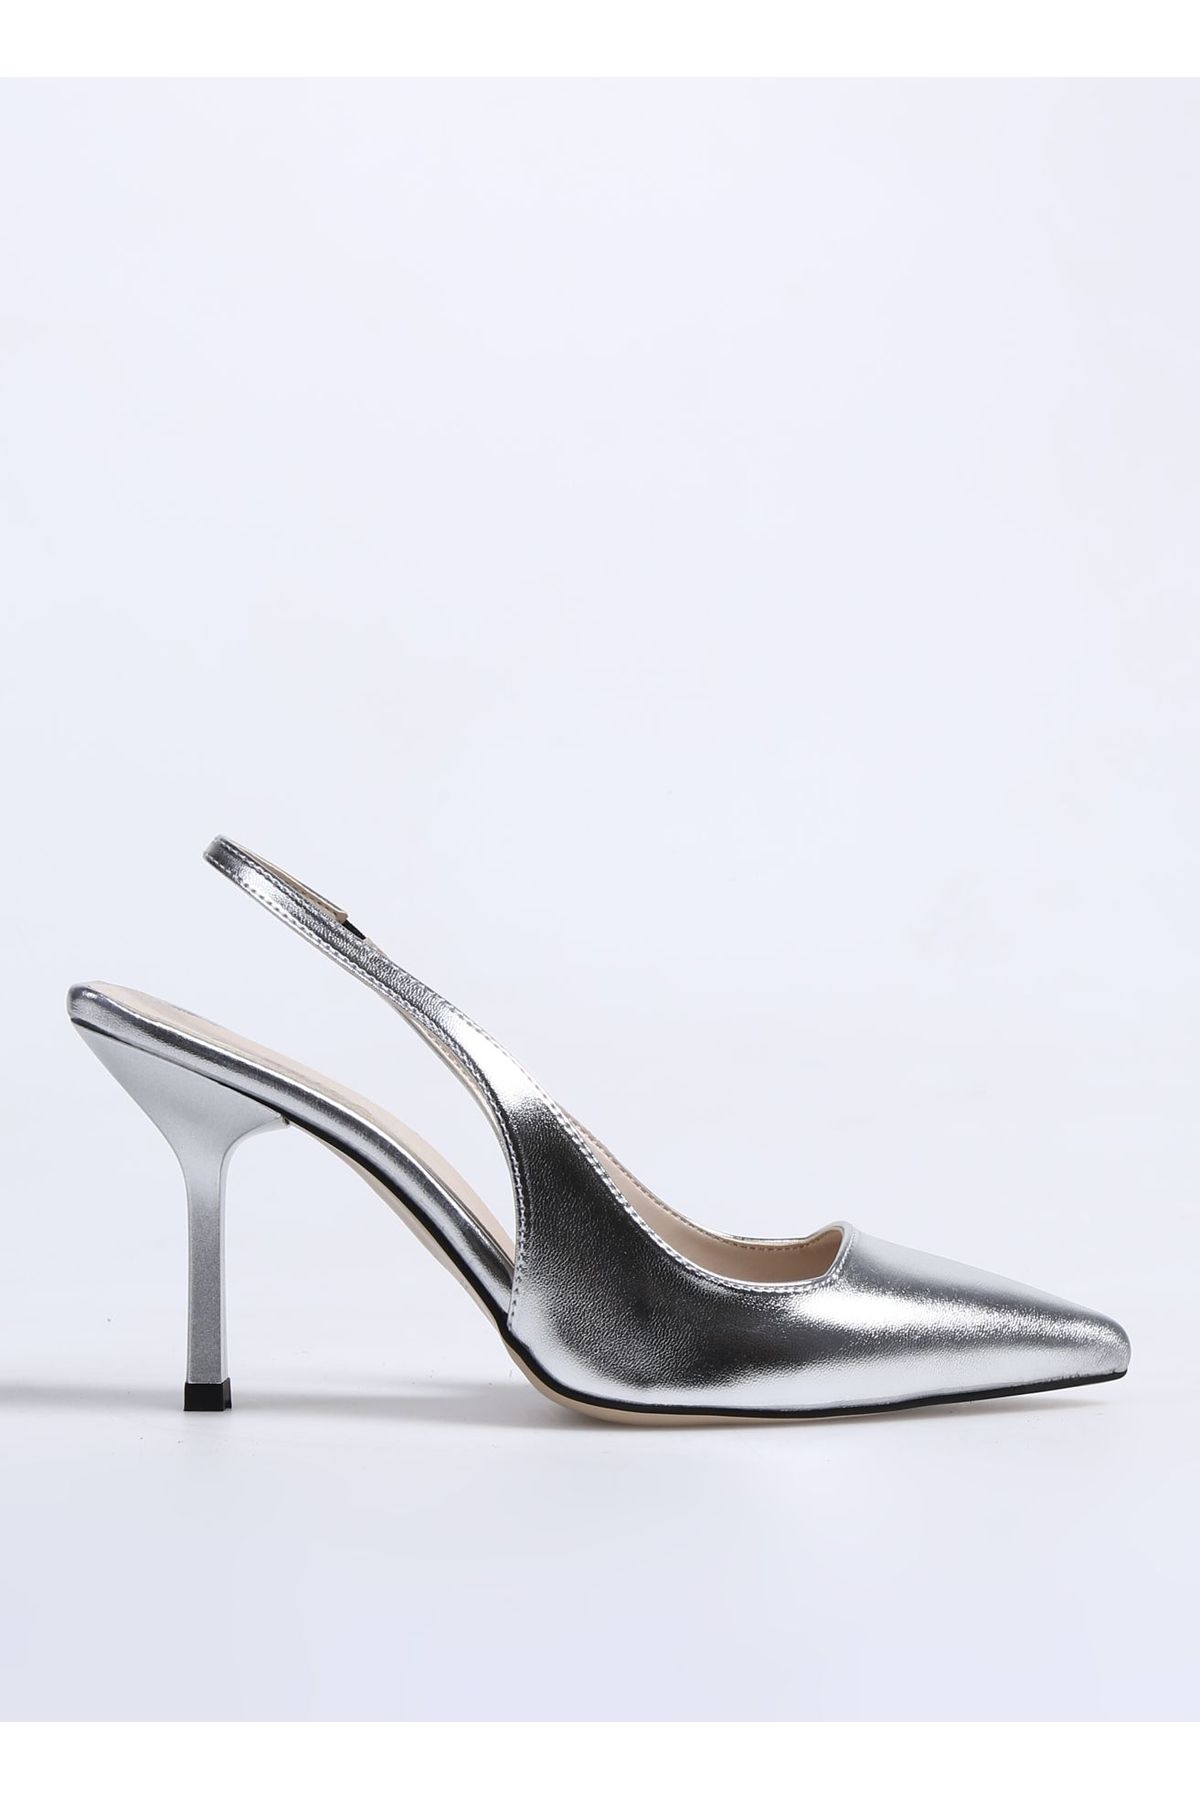 Fabrika Gümüş Kadın Topuklu Ayakkabı LINOS